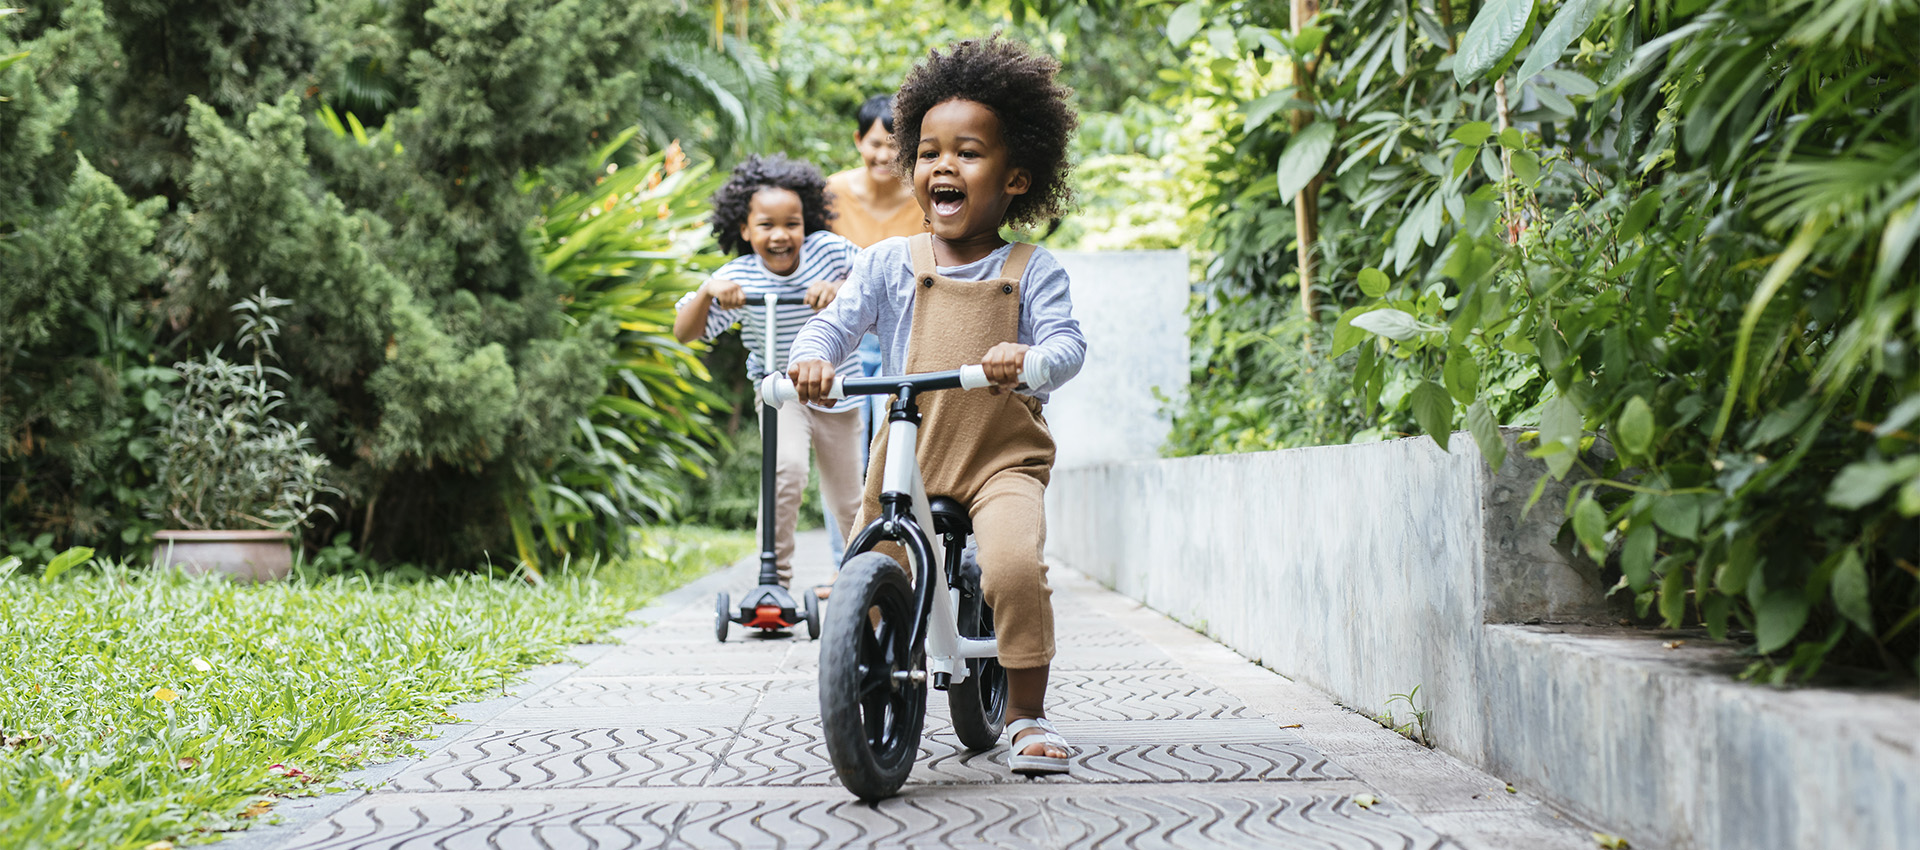 image of children riding bikes